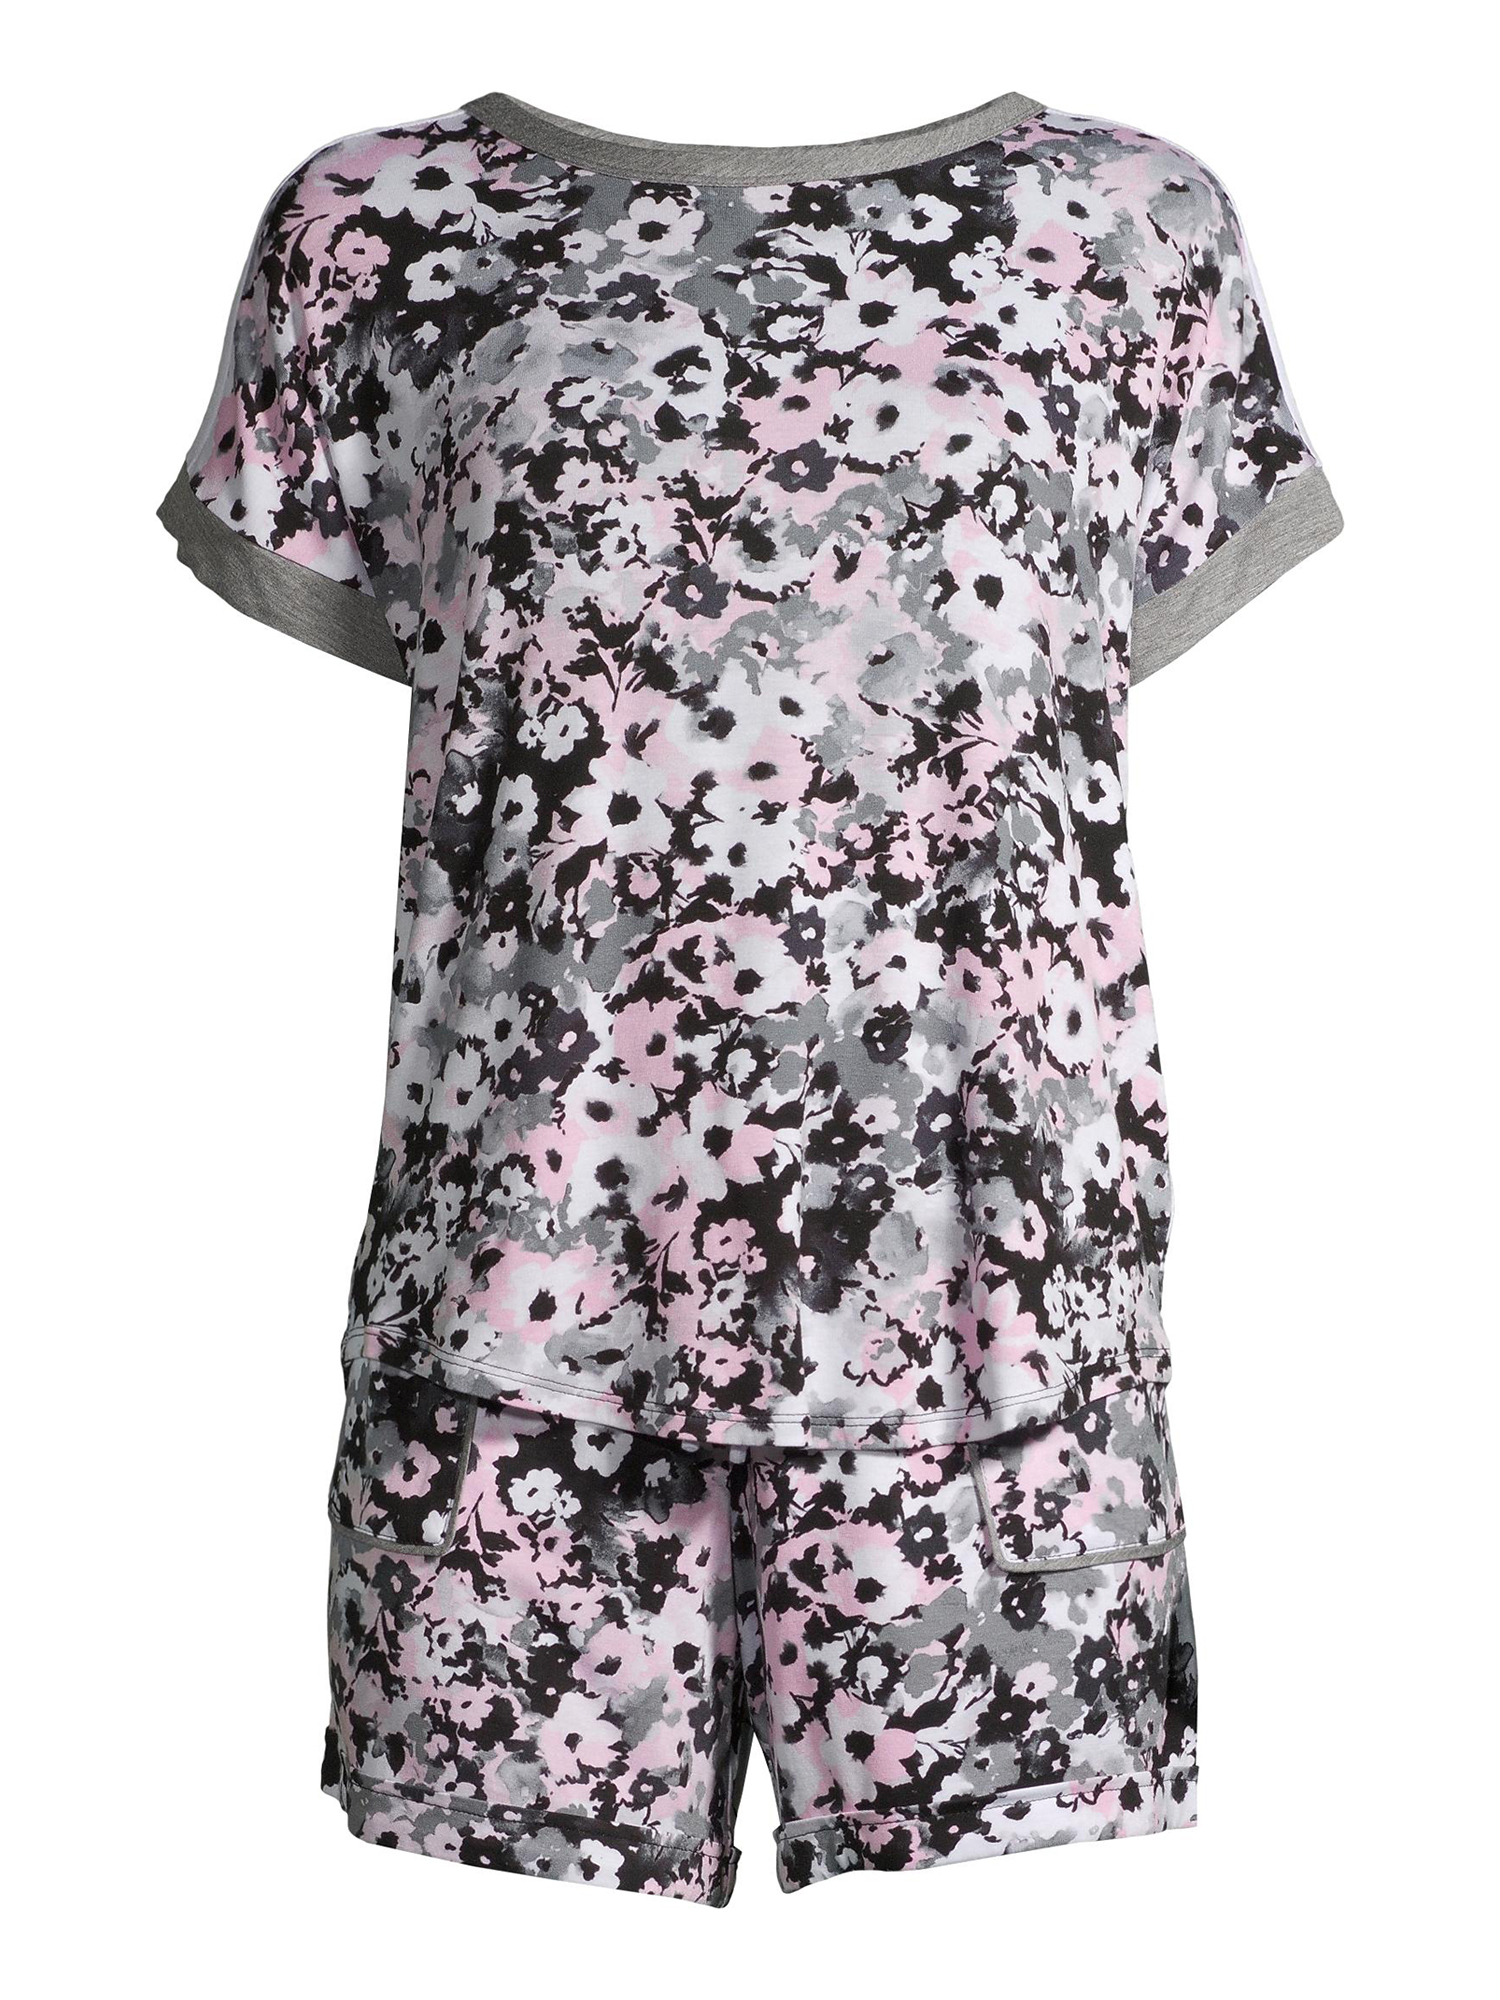 Secret Treasures Women's and Women's Plus Short Sleeve Top and Shorts Pajama Set - image 3 of 6